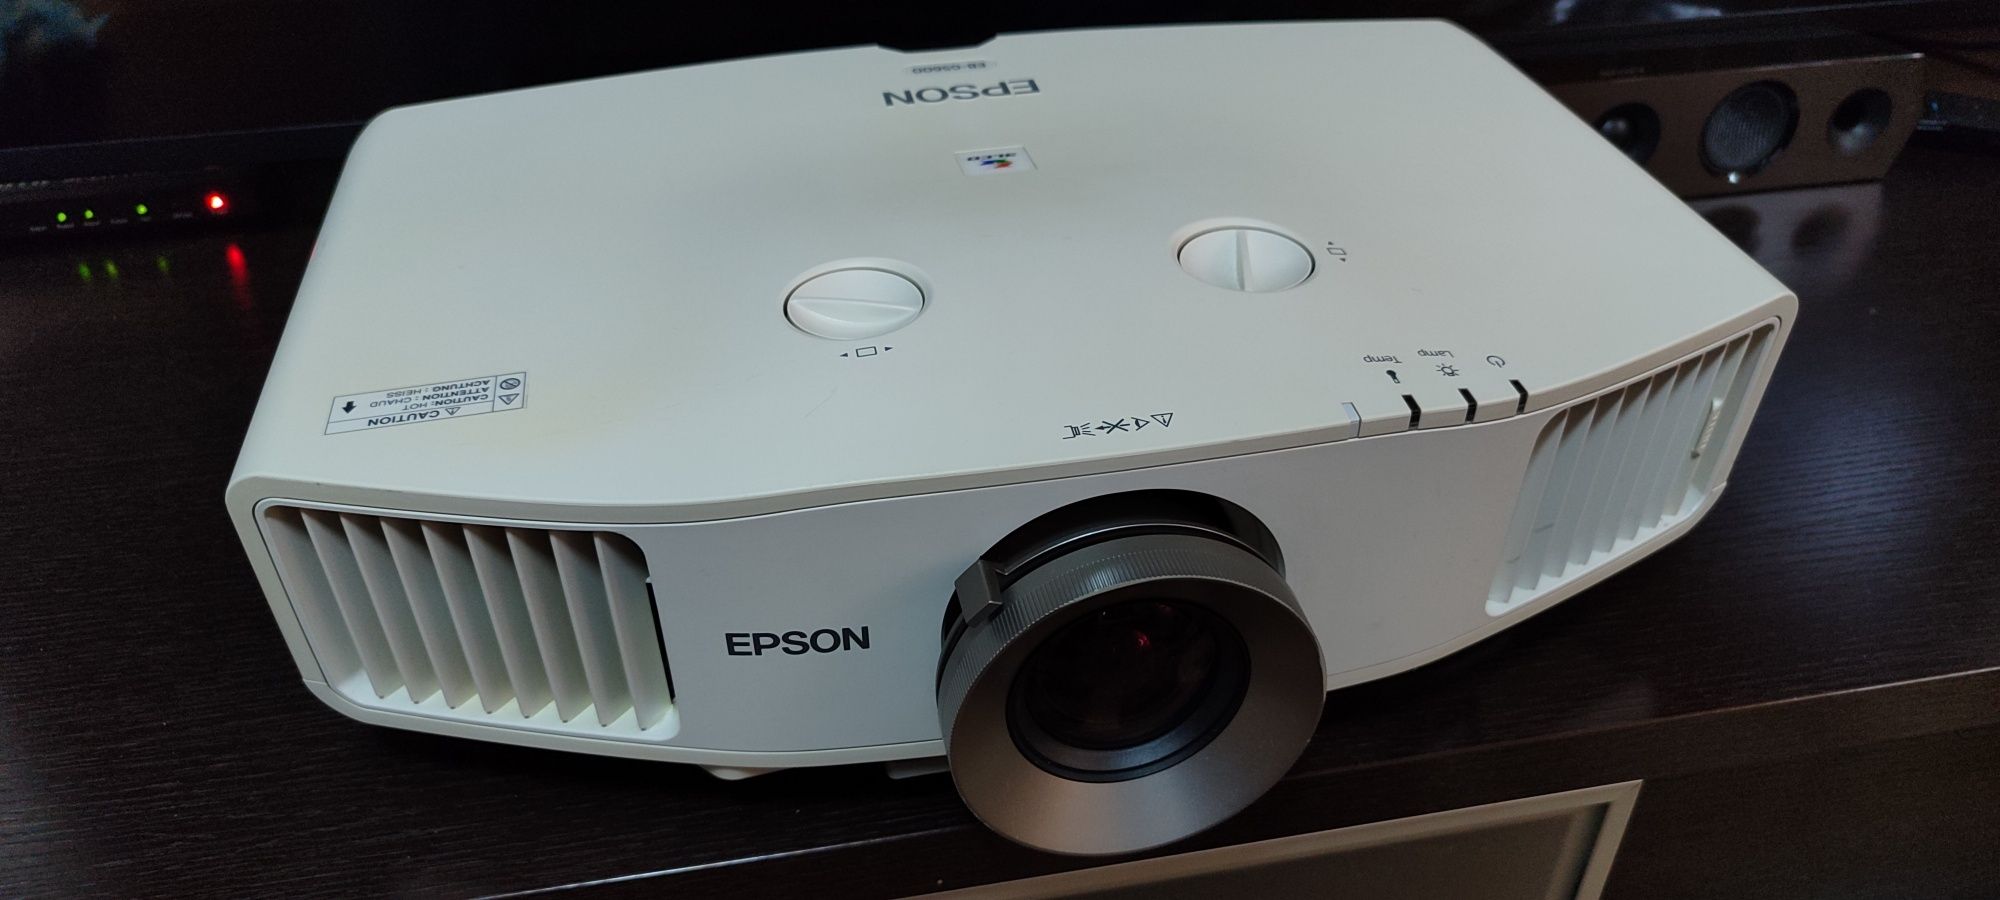 Видеопроектор Epson EB-G5600